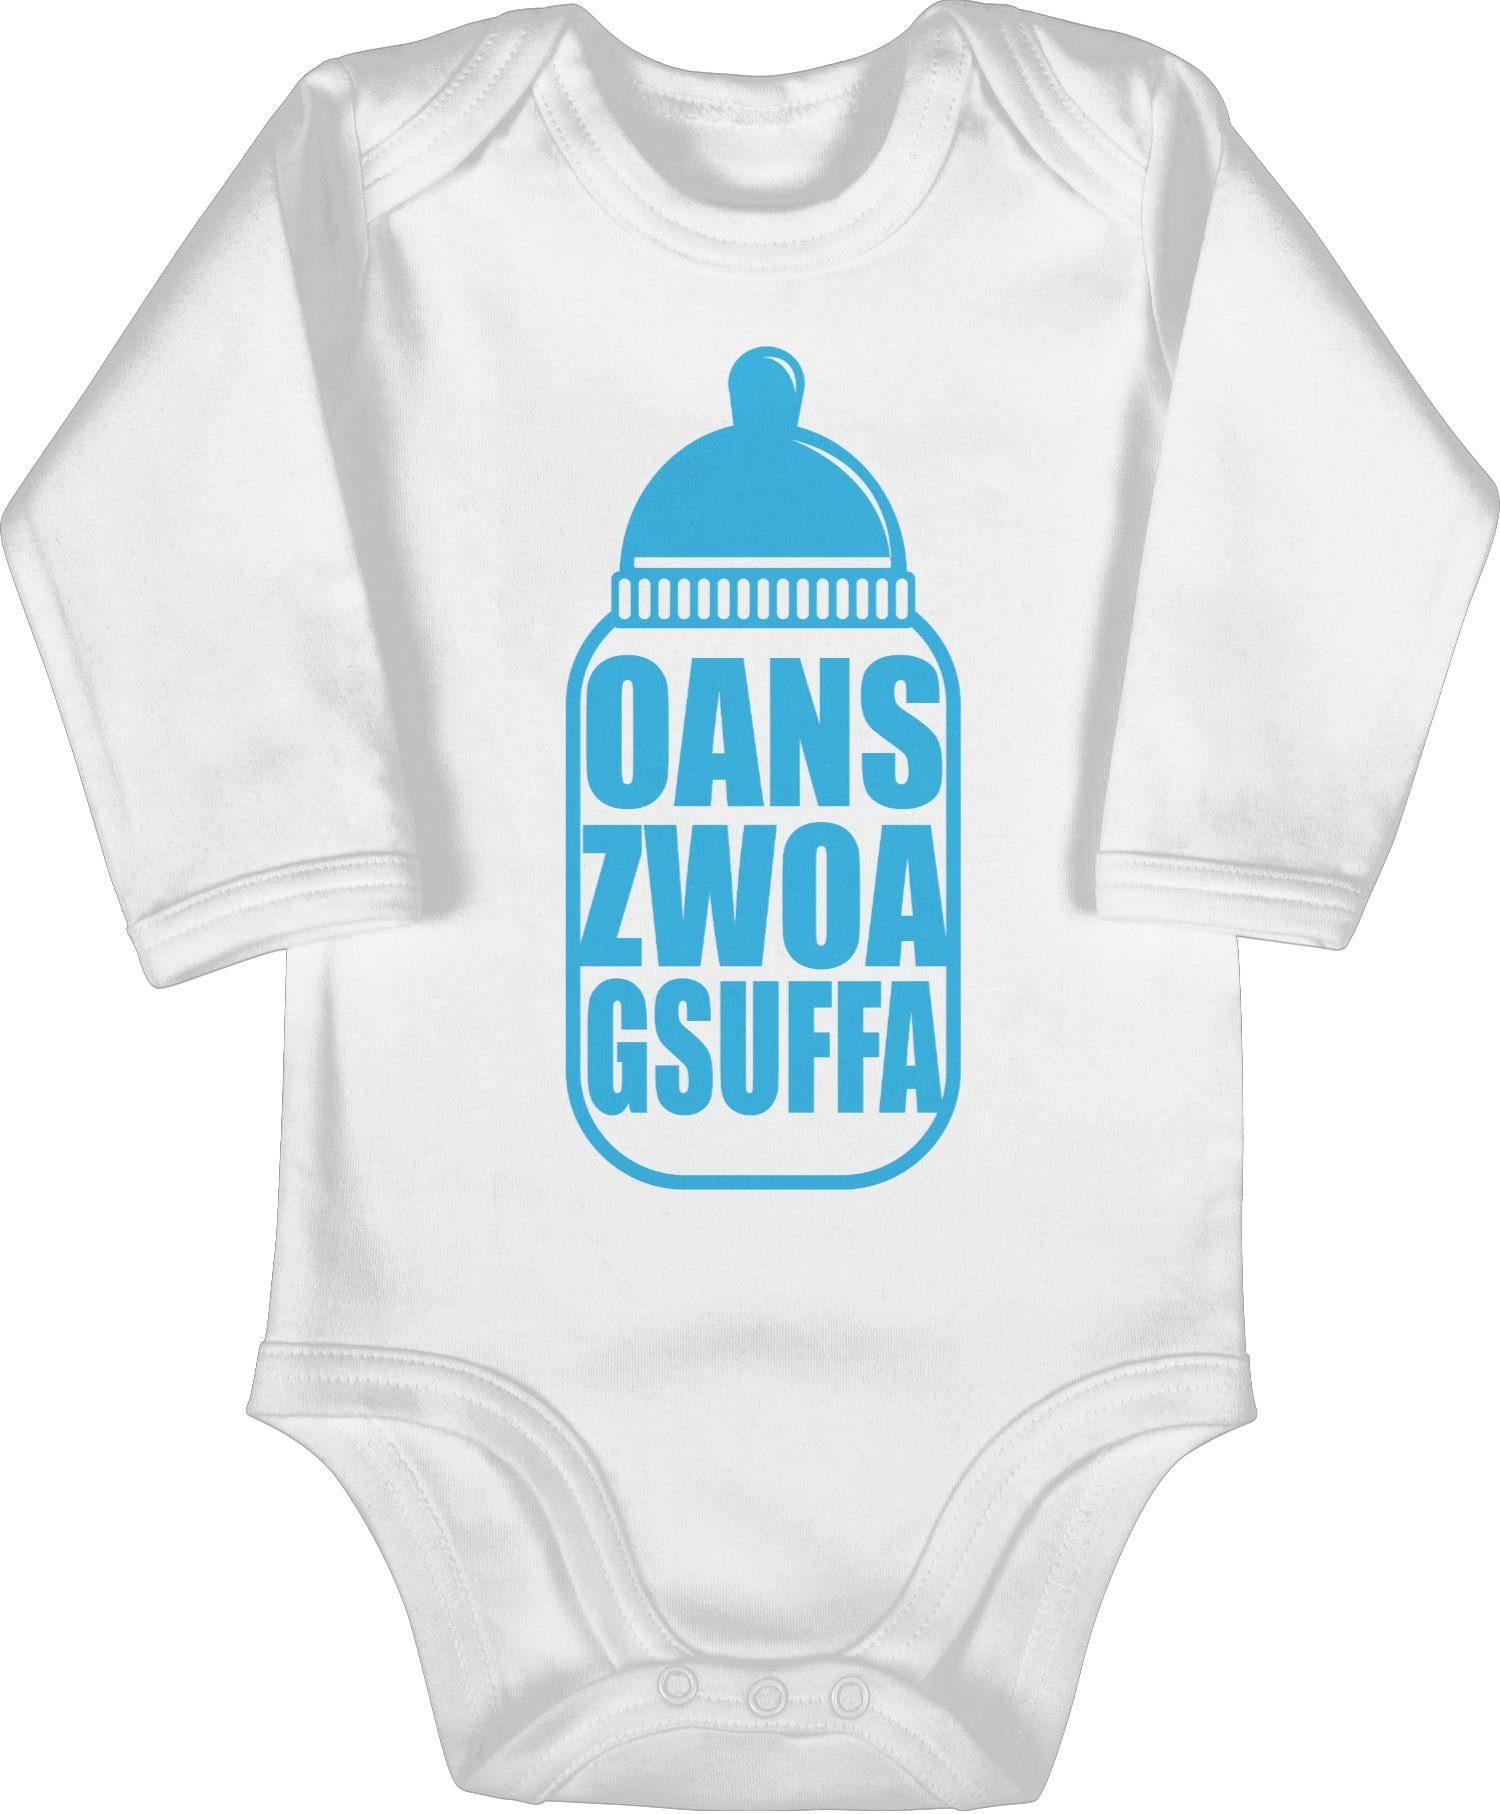 Zwoa Shirtracer Weiß Gsuffa Oktoberfest Oans Mode Baby für Babyflasche blau 2 Outfit Shirtbody